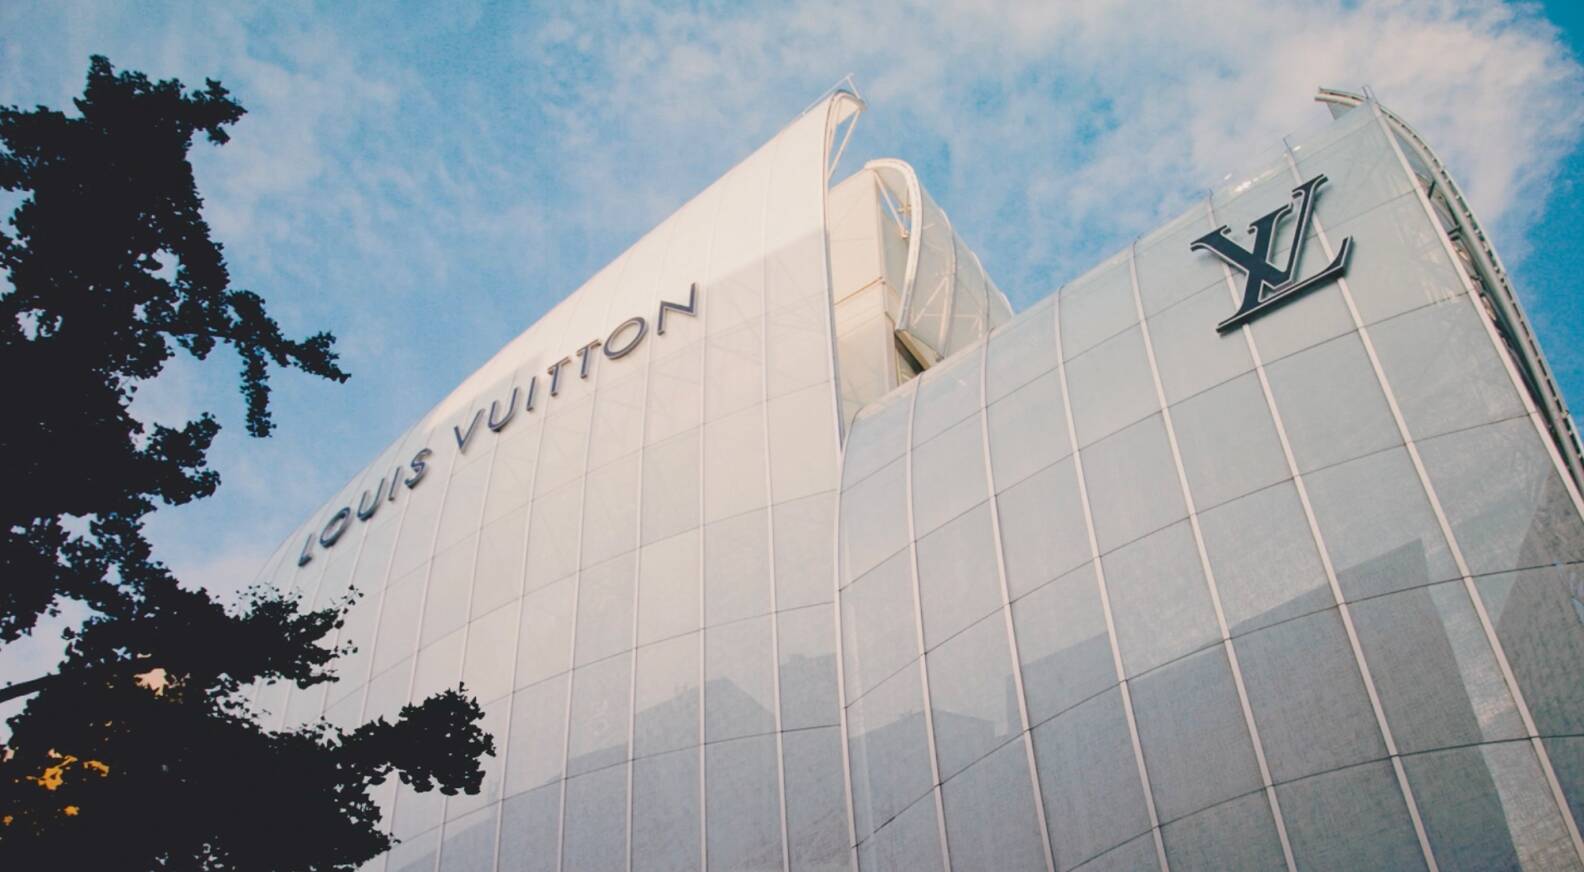 LOUIS VUITTON Maison Osaka Midosuji / Jun Aoki & Associates